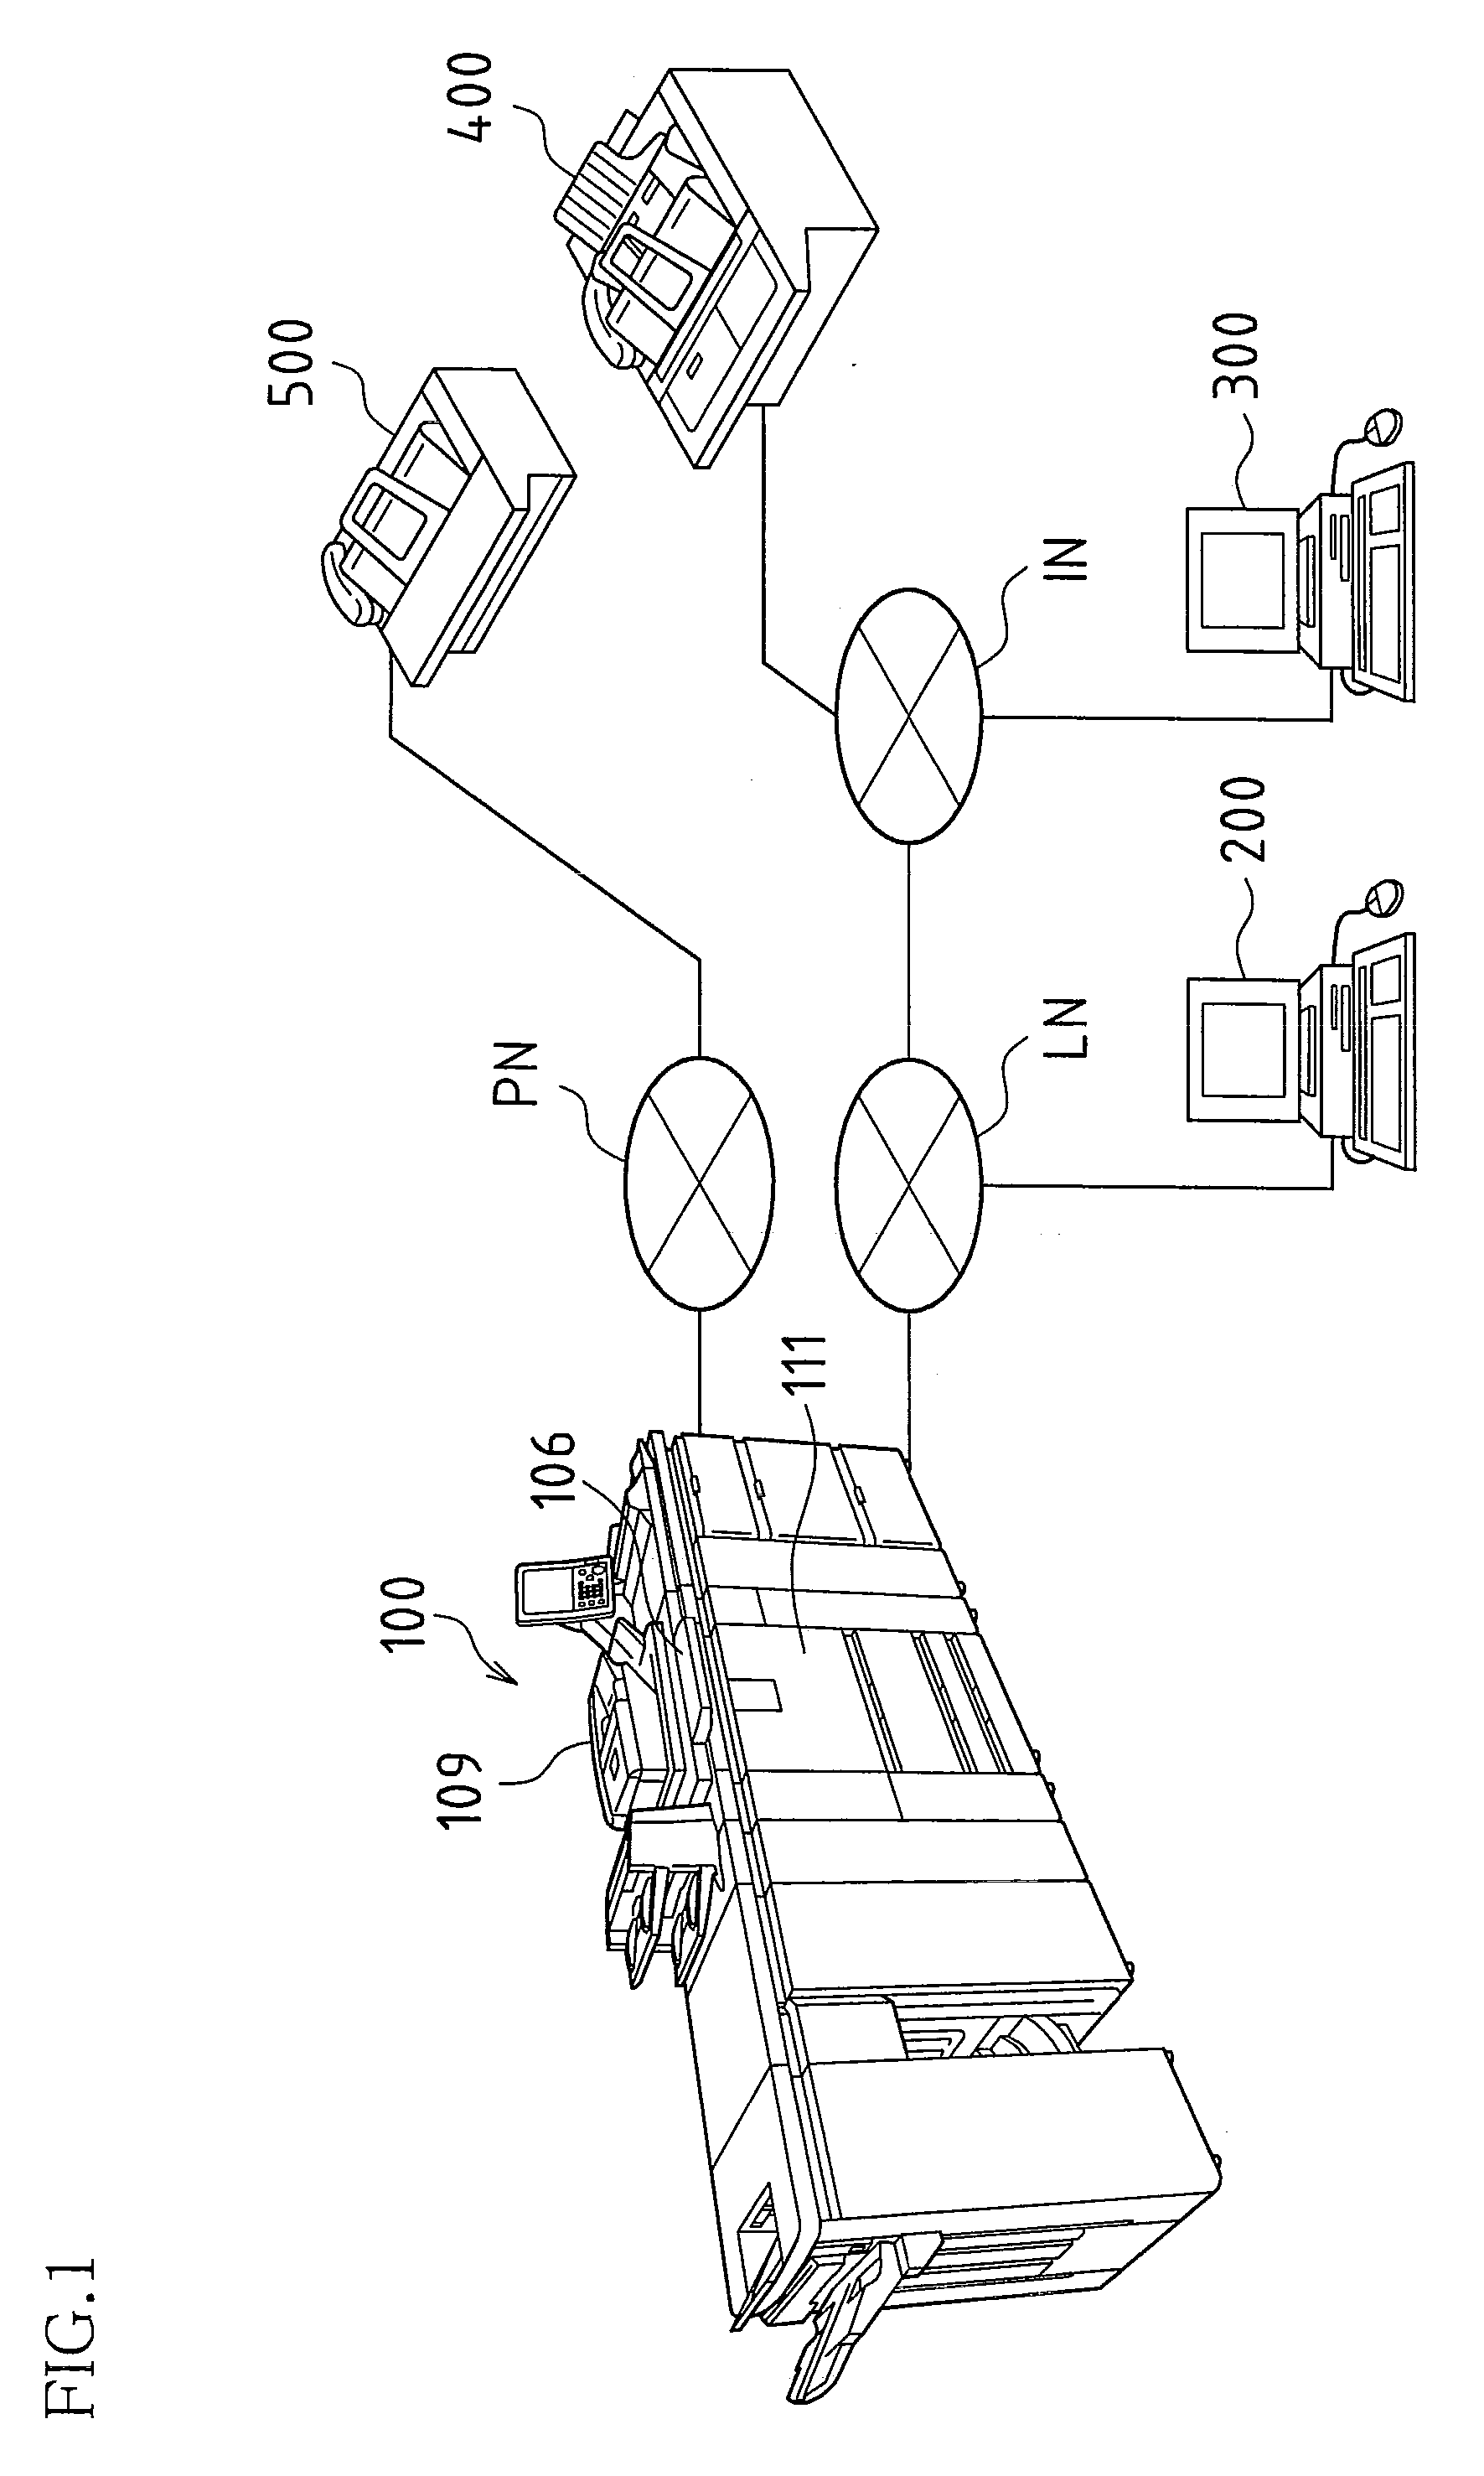 Image processing apparatus, image forming apparatus, and image sending apparatus